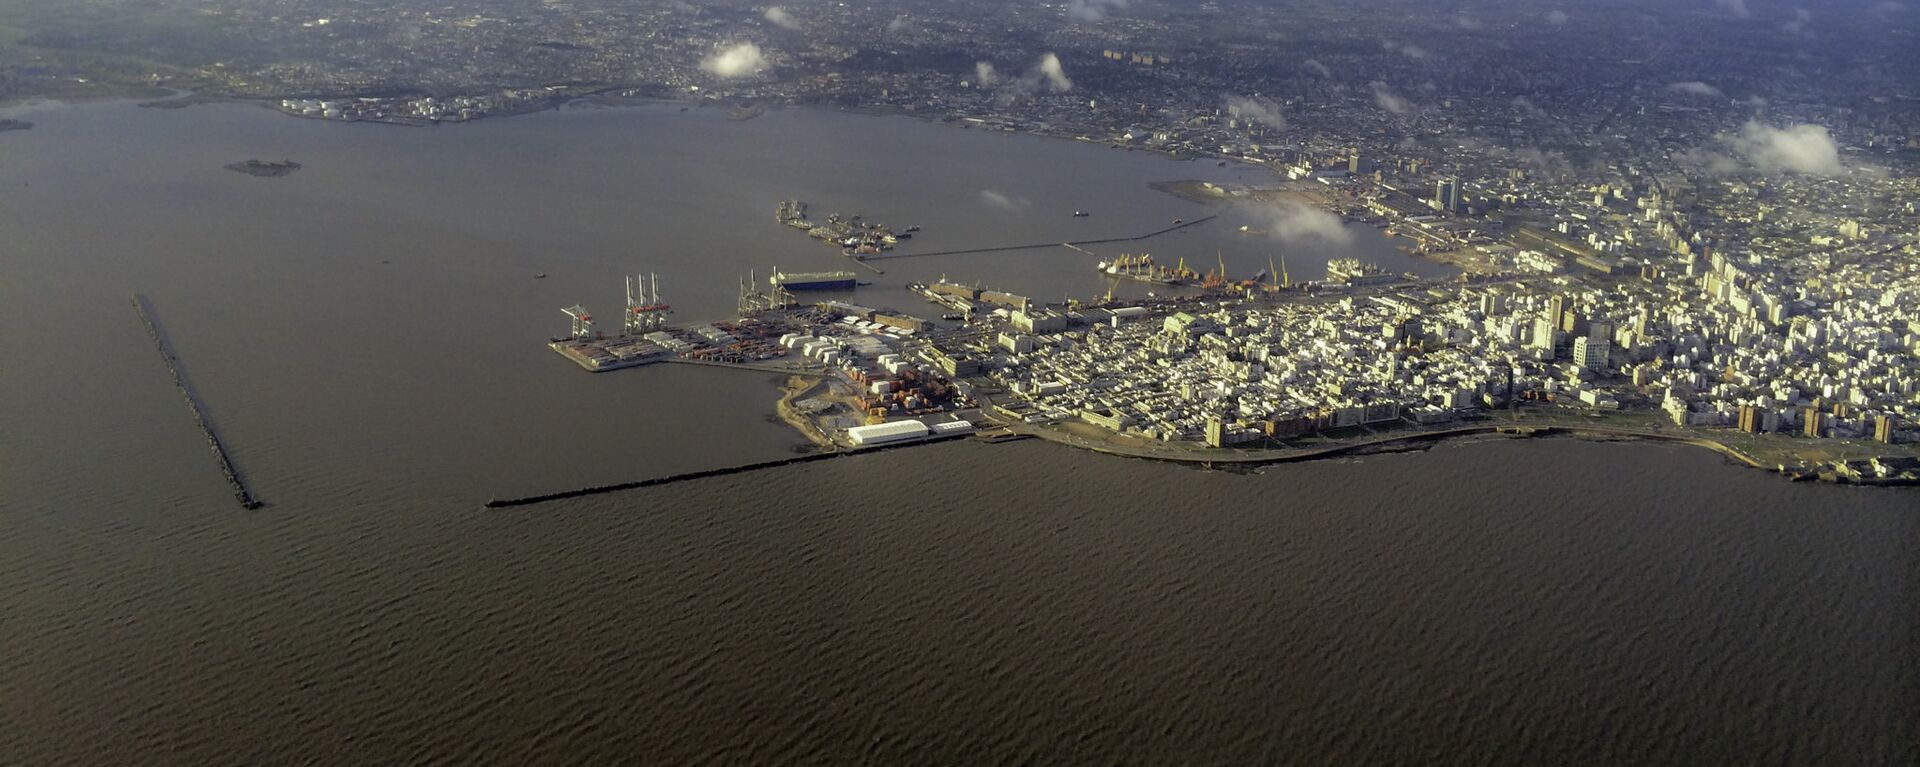 El puerto de Montevideo (archivo) - Sputnik Mundo, 1920, 20.02.2019